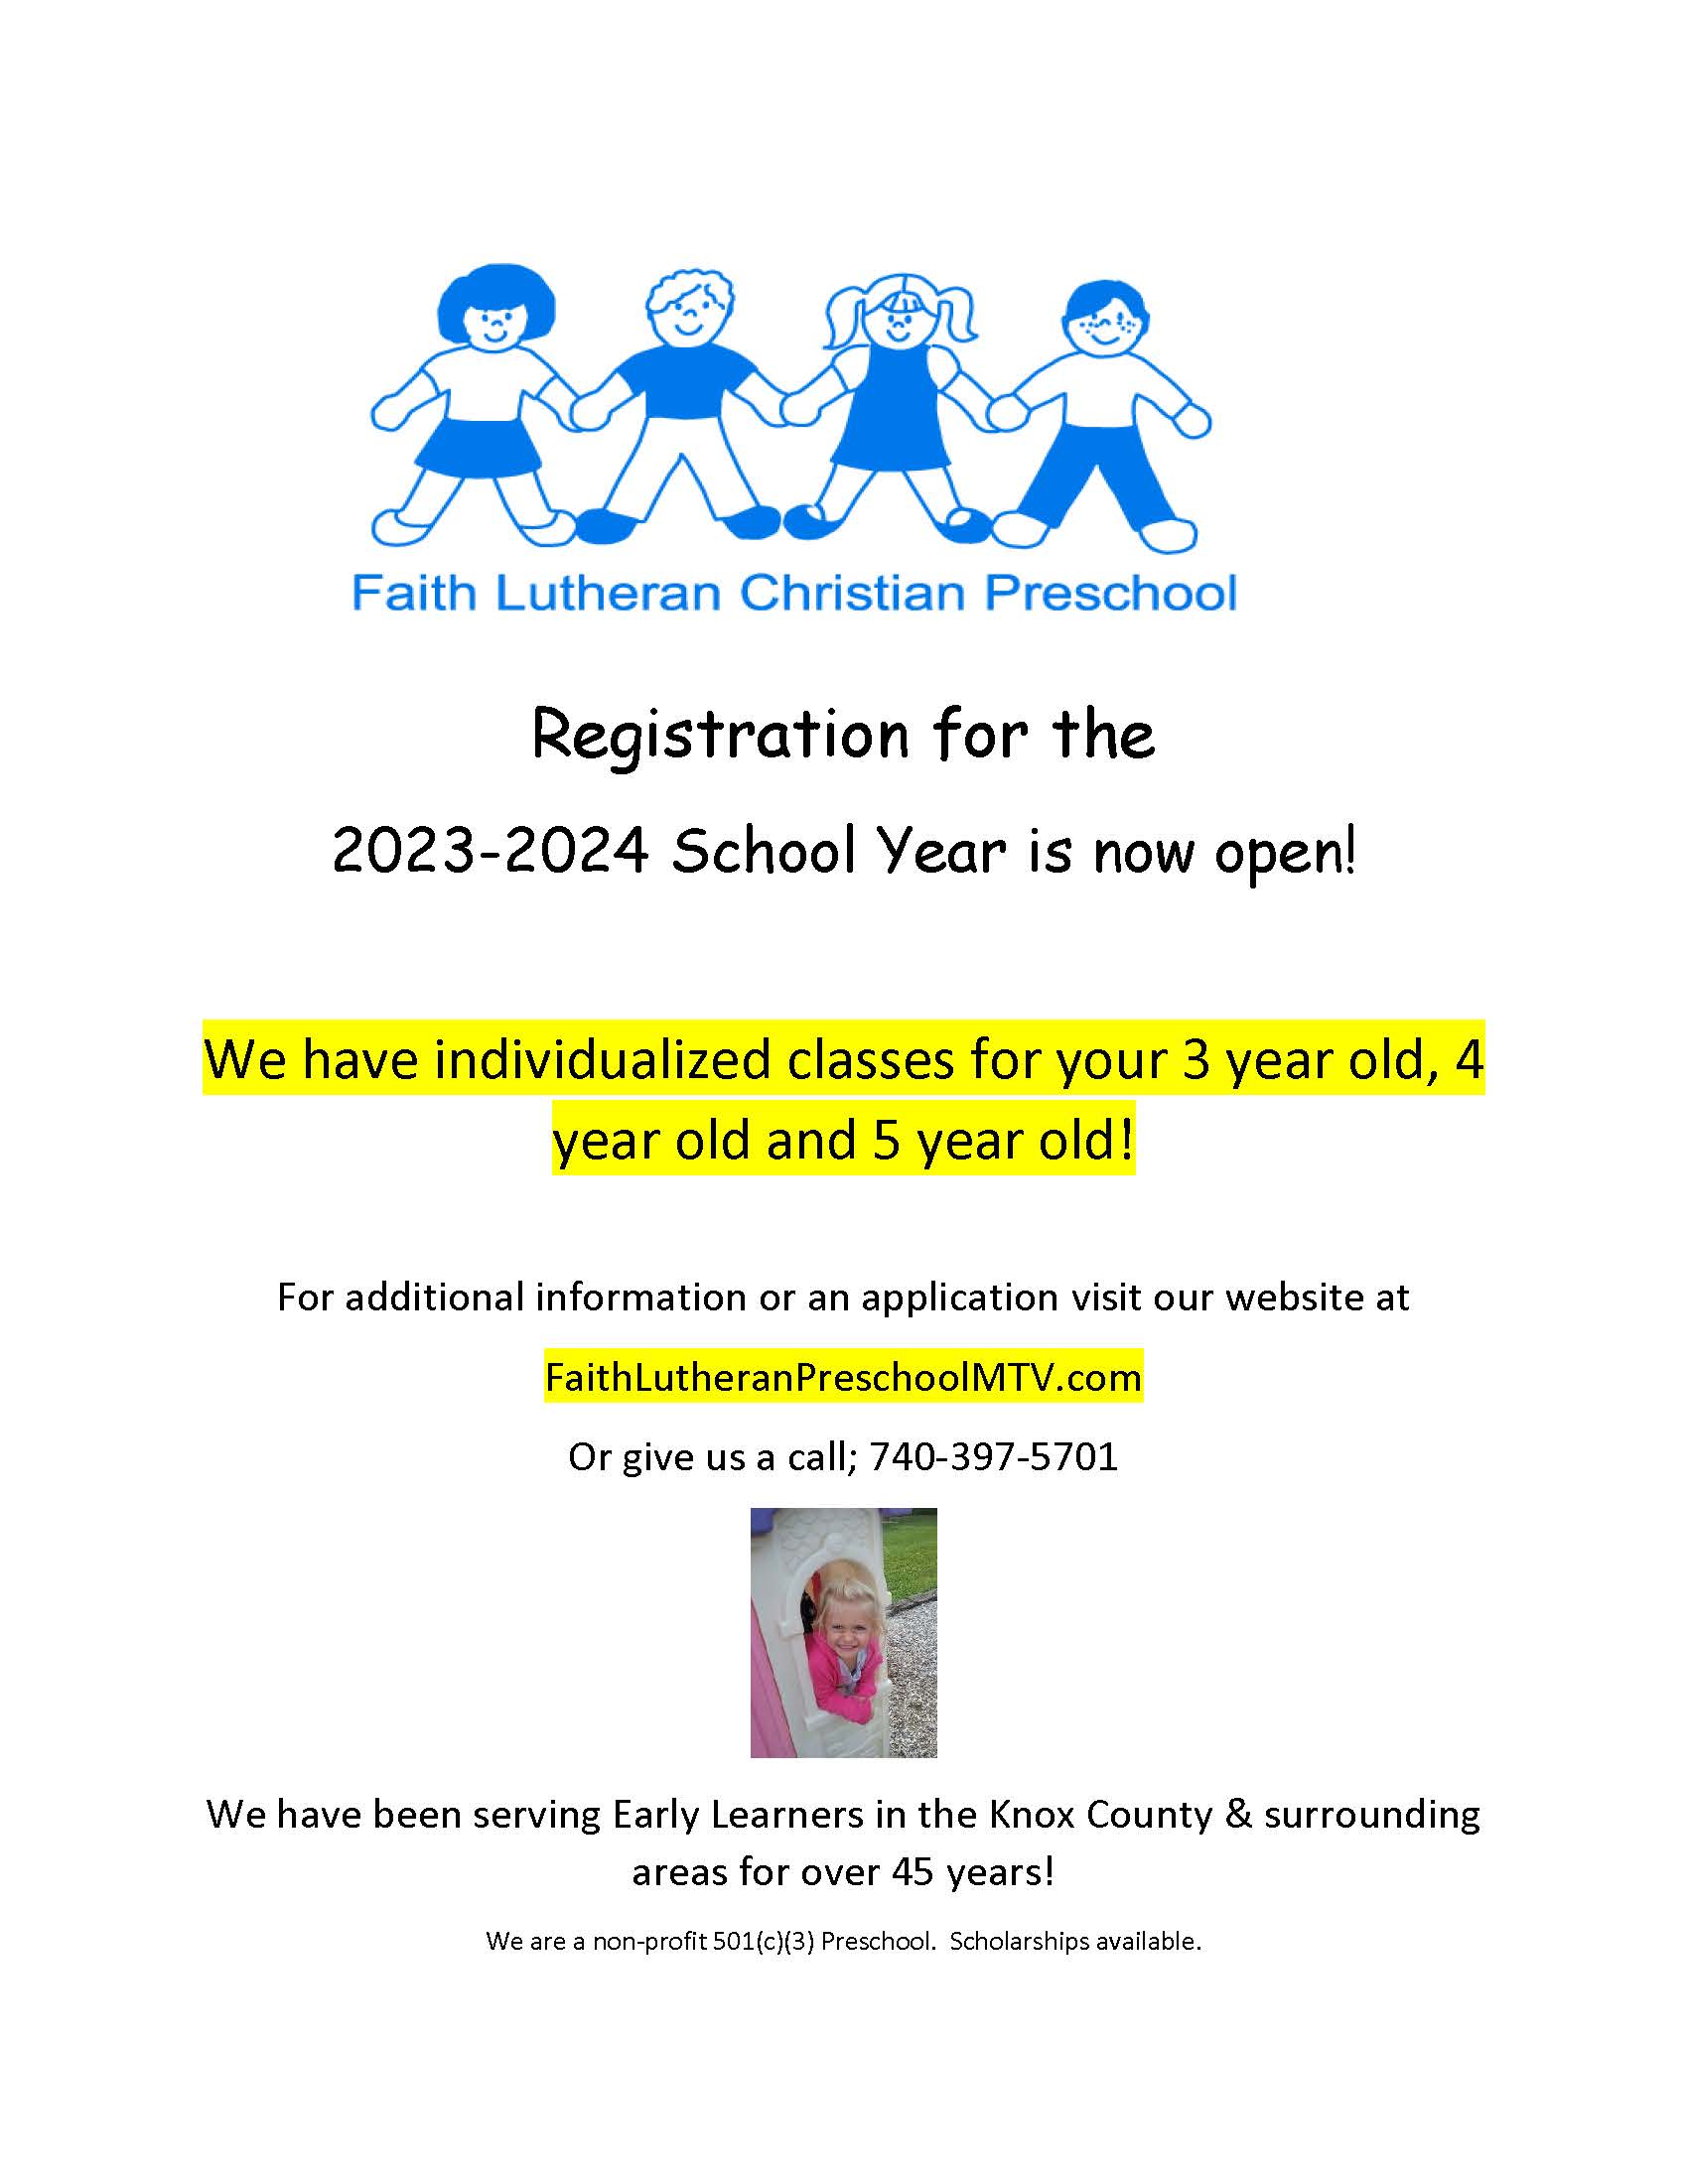 Faith Lutheran Christian Preschool - 2023-2024 Registration